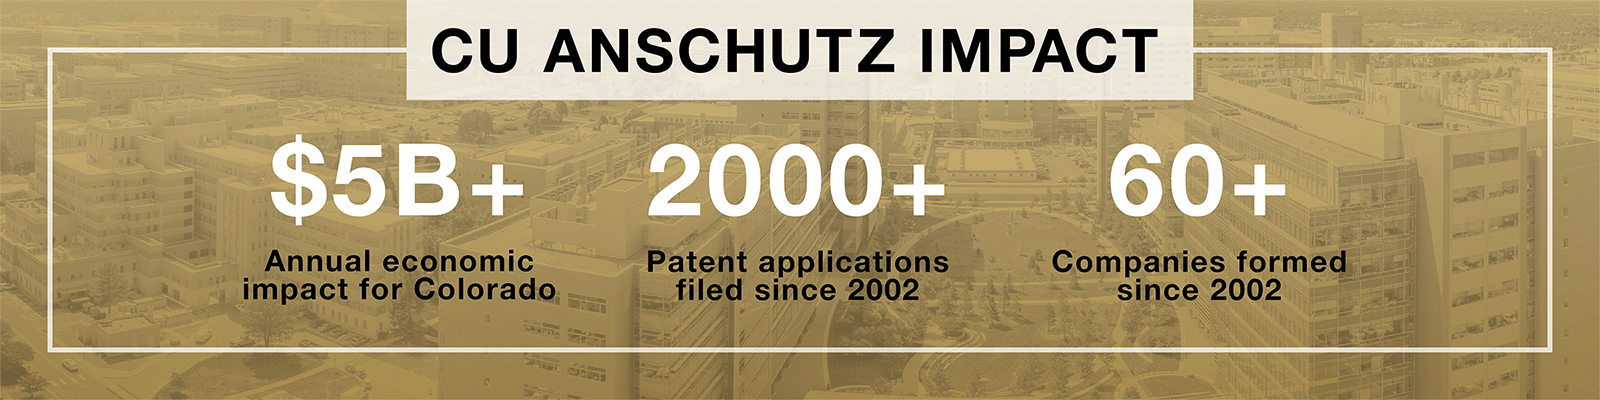 CU Anschutz影响:科罗拉多州每年经济影响超过50亿美元，自2002年以来提交了2000多份专利申请。自2002年以来成立了60多家公司